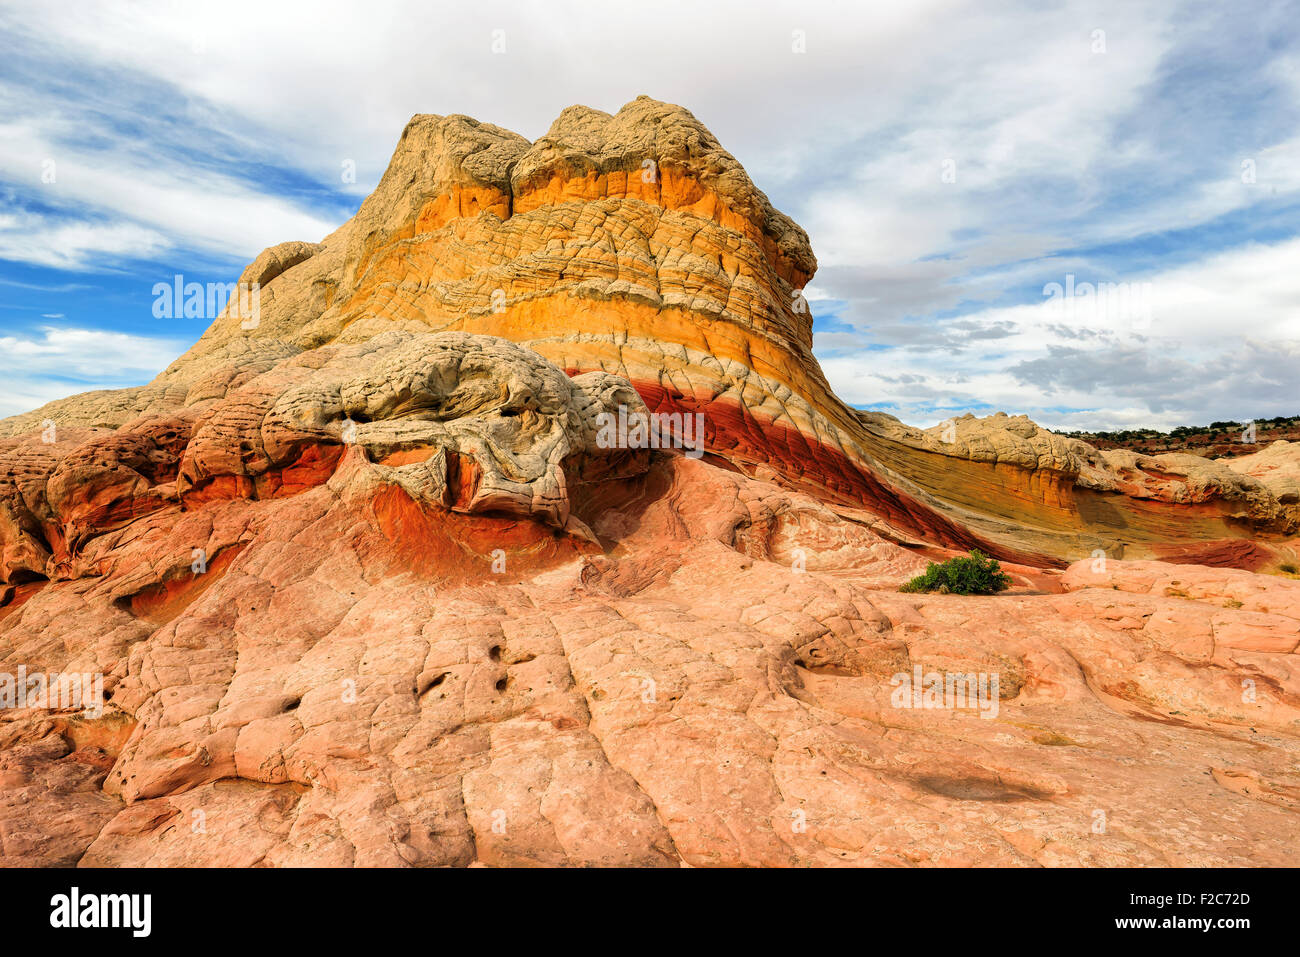 The famous Buttes of White Pocket, Vermilion Cliffs, Arizona, USA. Stock Photo